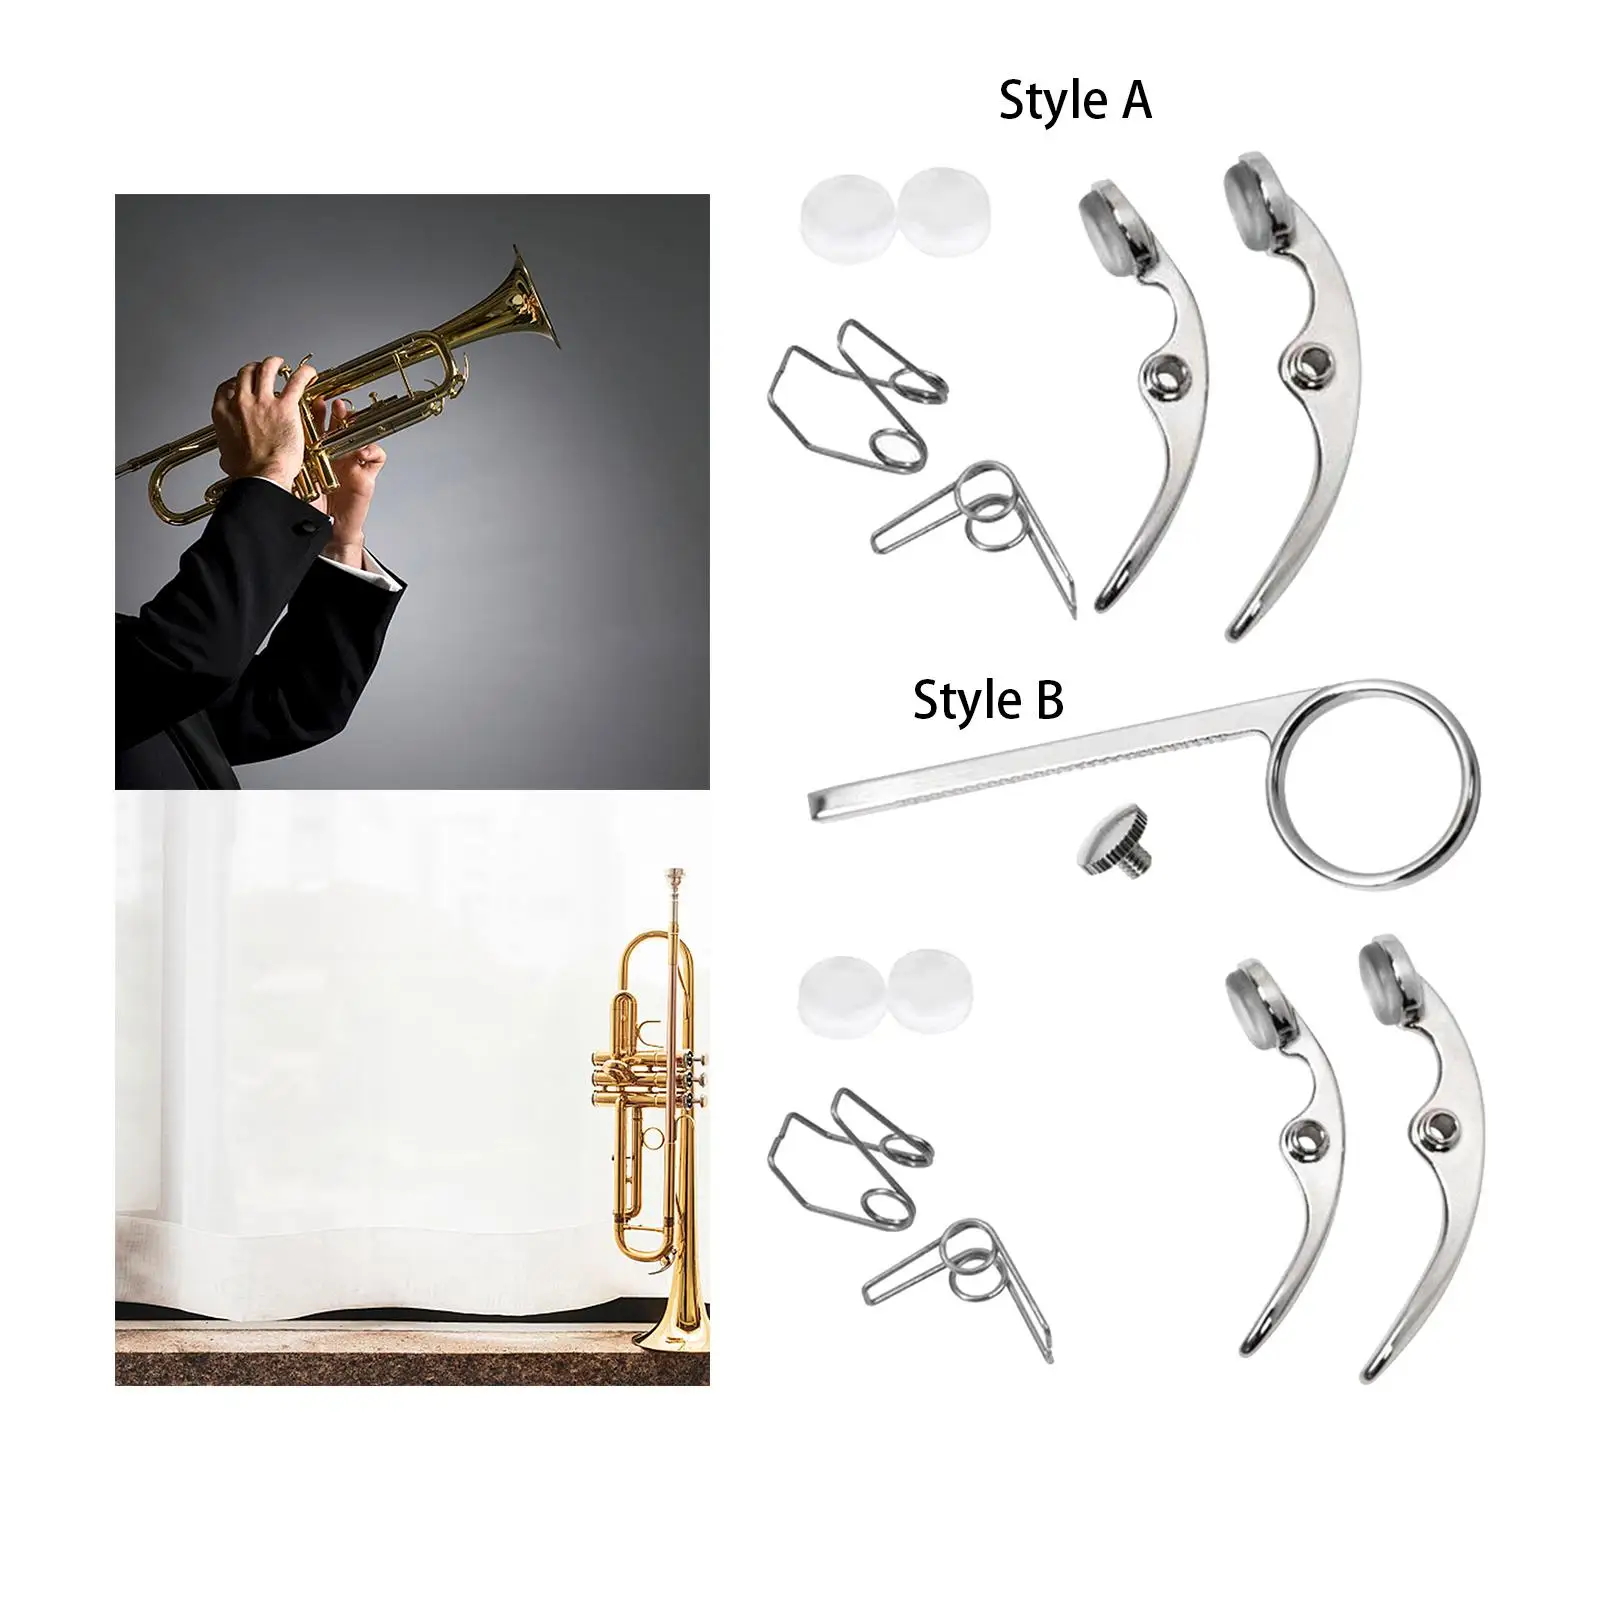 Trumpet Spit Valve Trumpet Maintenance Repairing Accessory for Trumpet